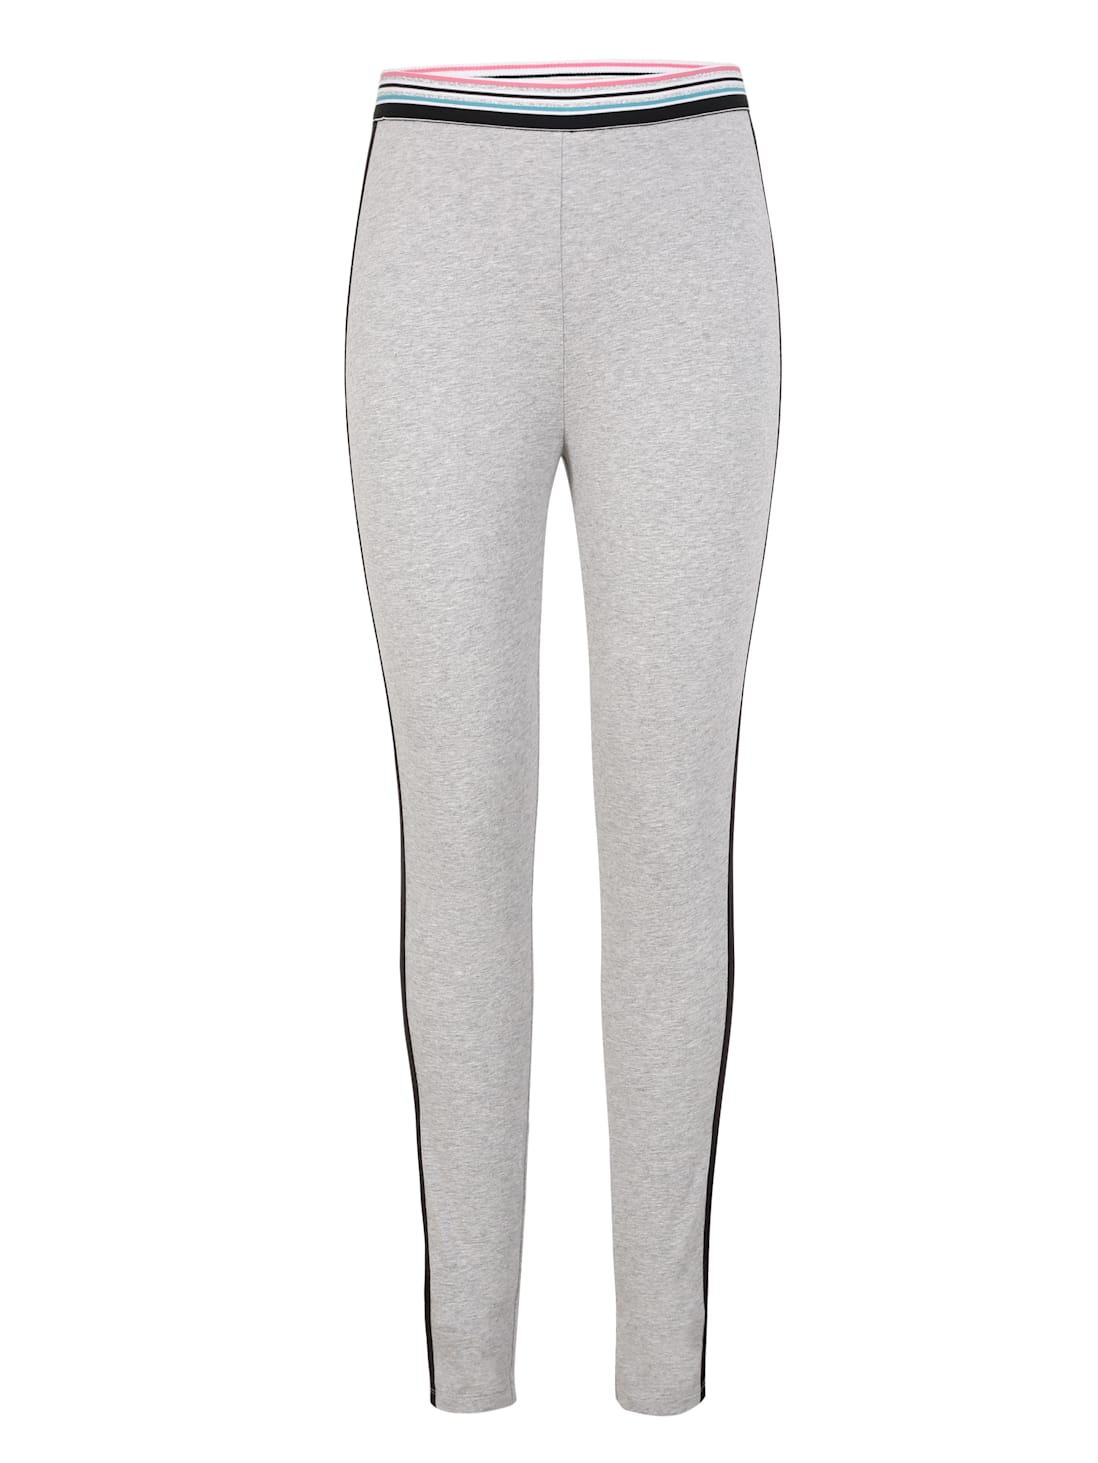 20 Best Grey Leggings ideas | grey leggings, cute outfits, outfits with  leggings